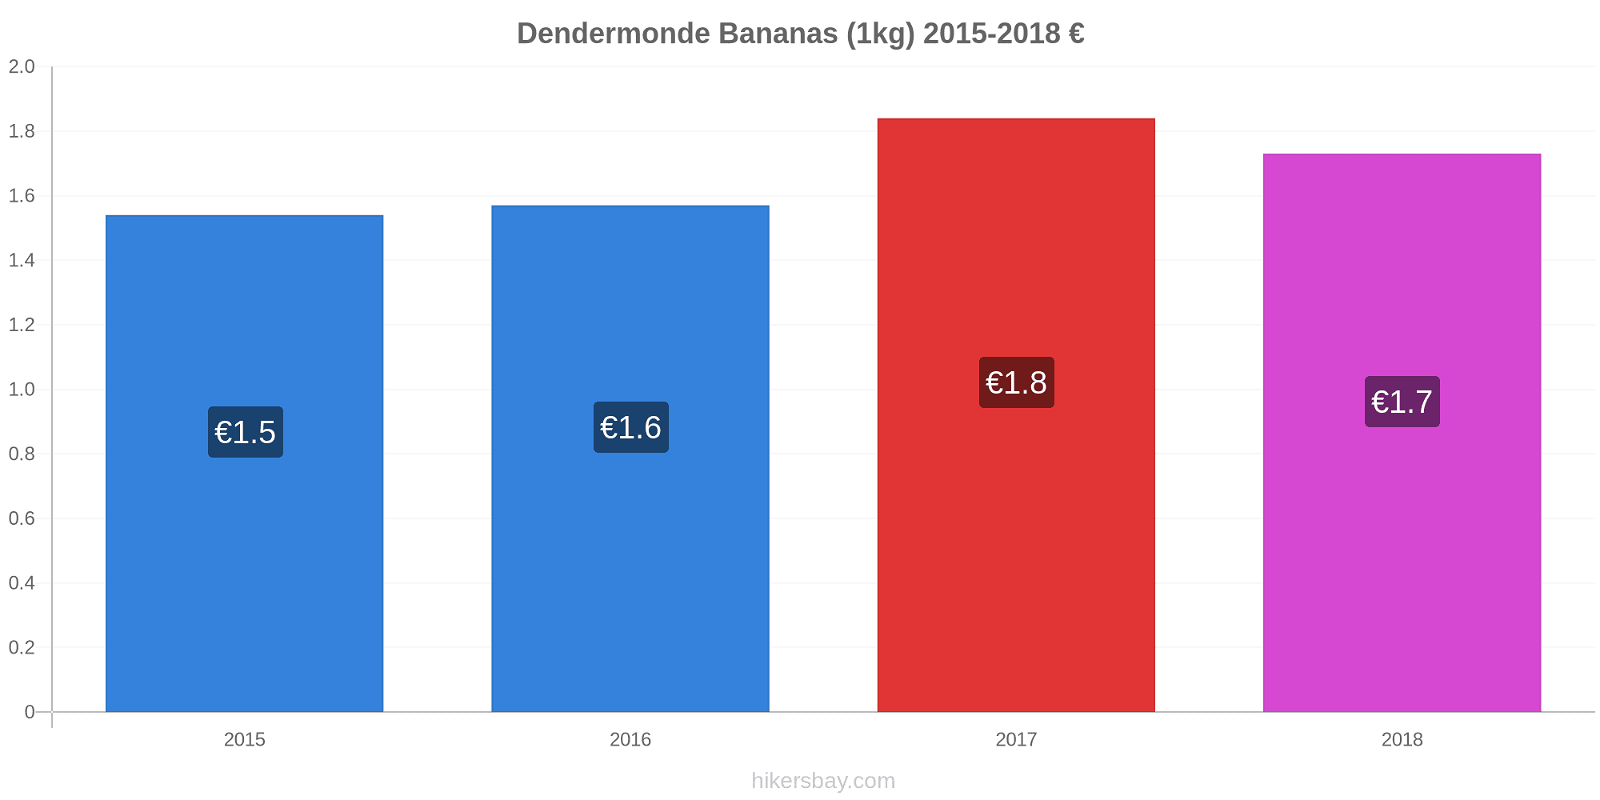 Dendermonde price changes Bananas (1kg) hikersbay.com